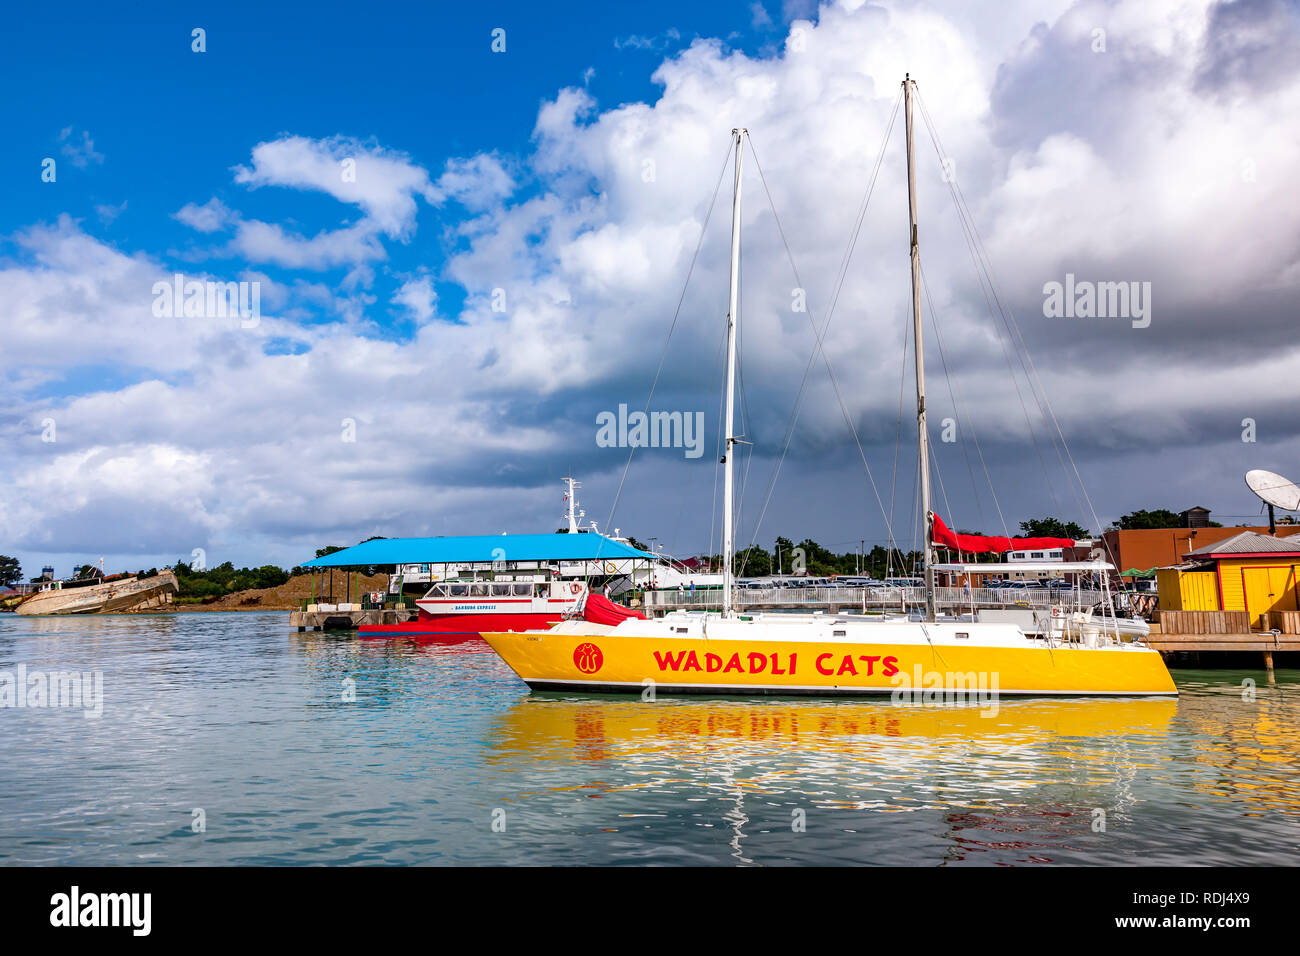 Wadadli Cats moored St John's, Antigua, in the Leeward Islands of the Caribbean Stock Photo